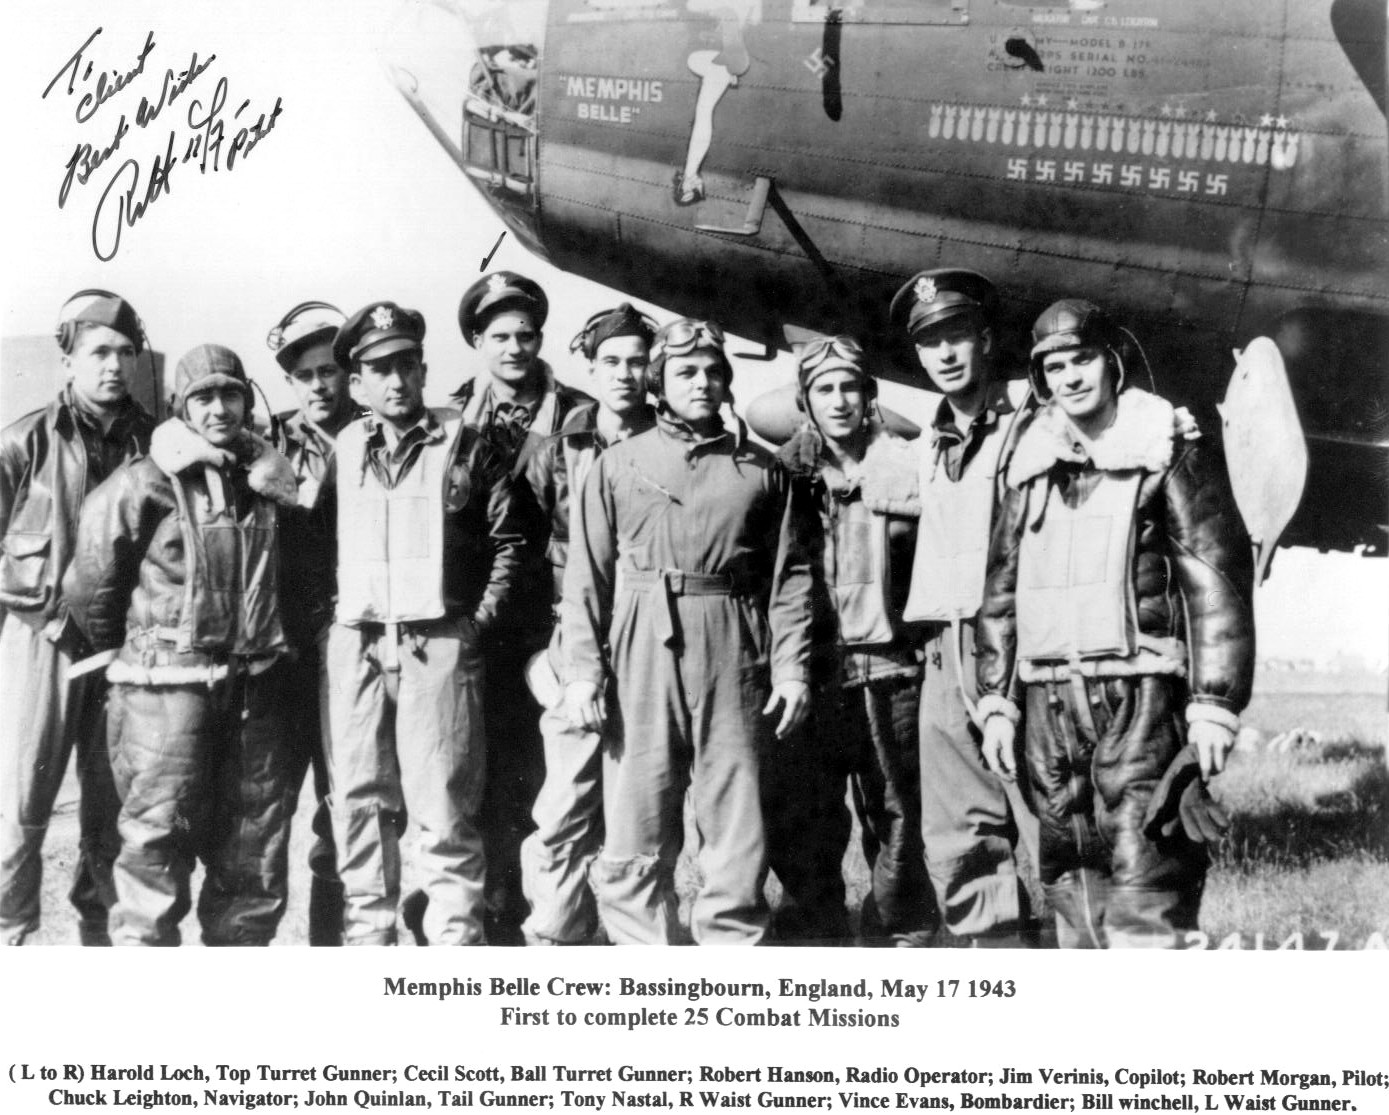 Crew of the Memphis Belle